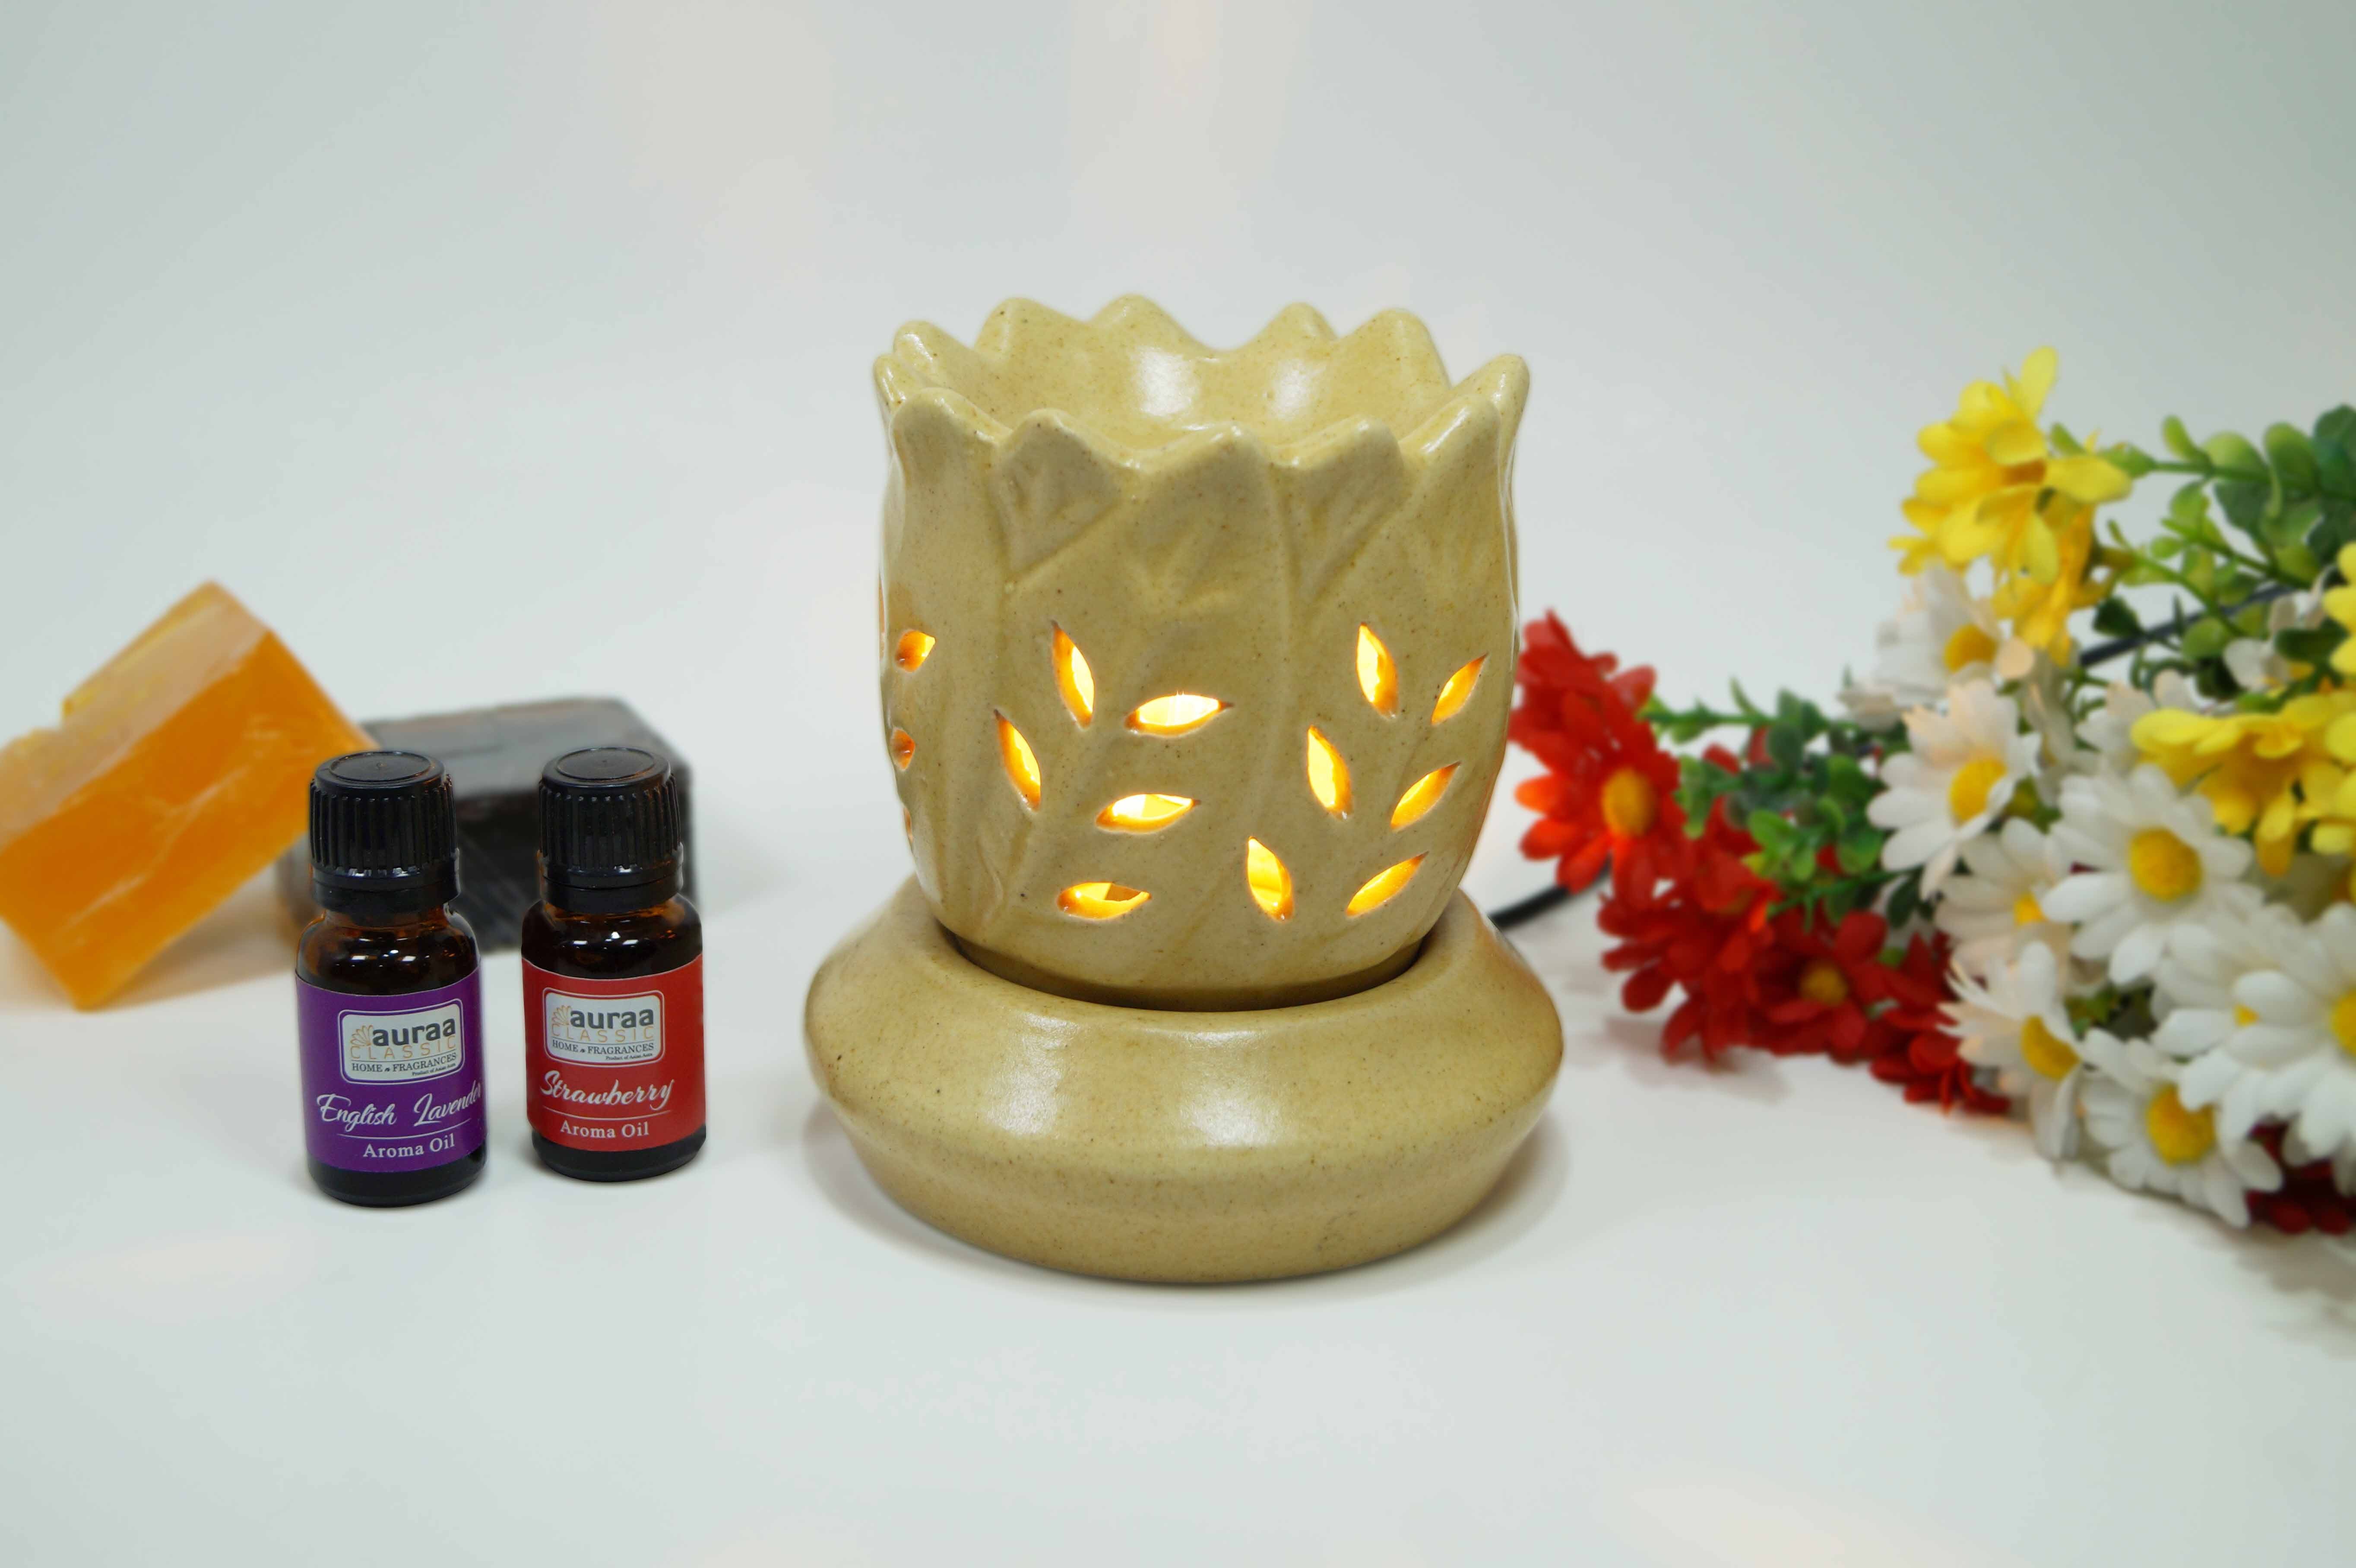 Asian Aura Ceramic Aromatic Oil Diffuser with 2 oil bottles AAEB 0021-B